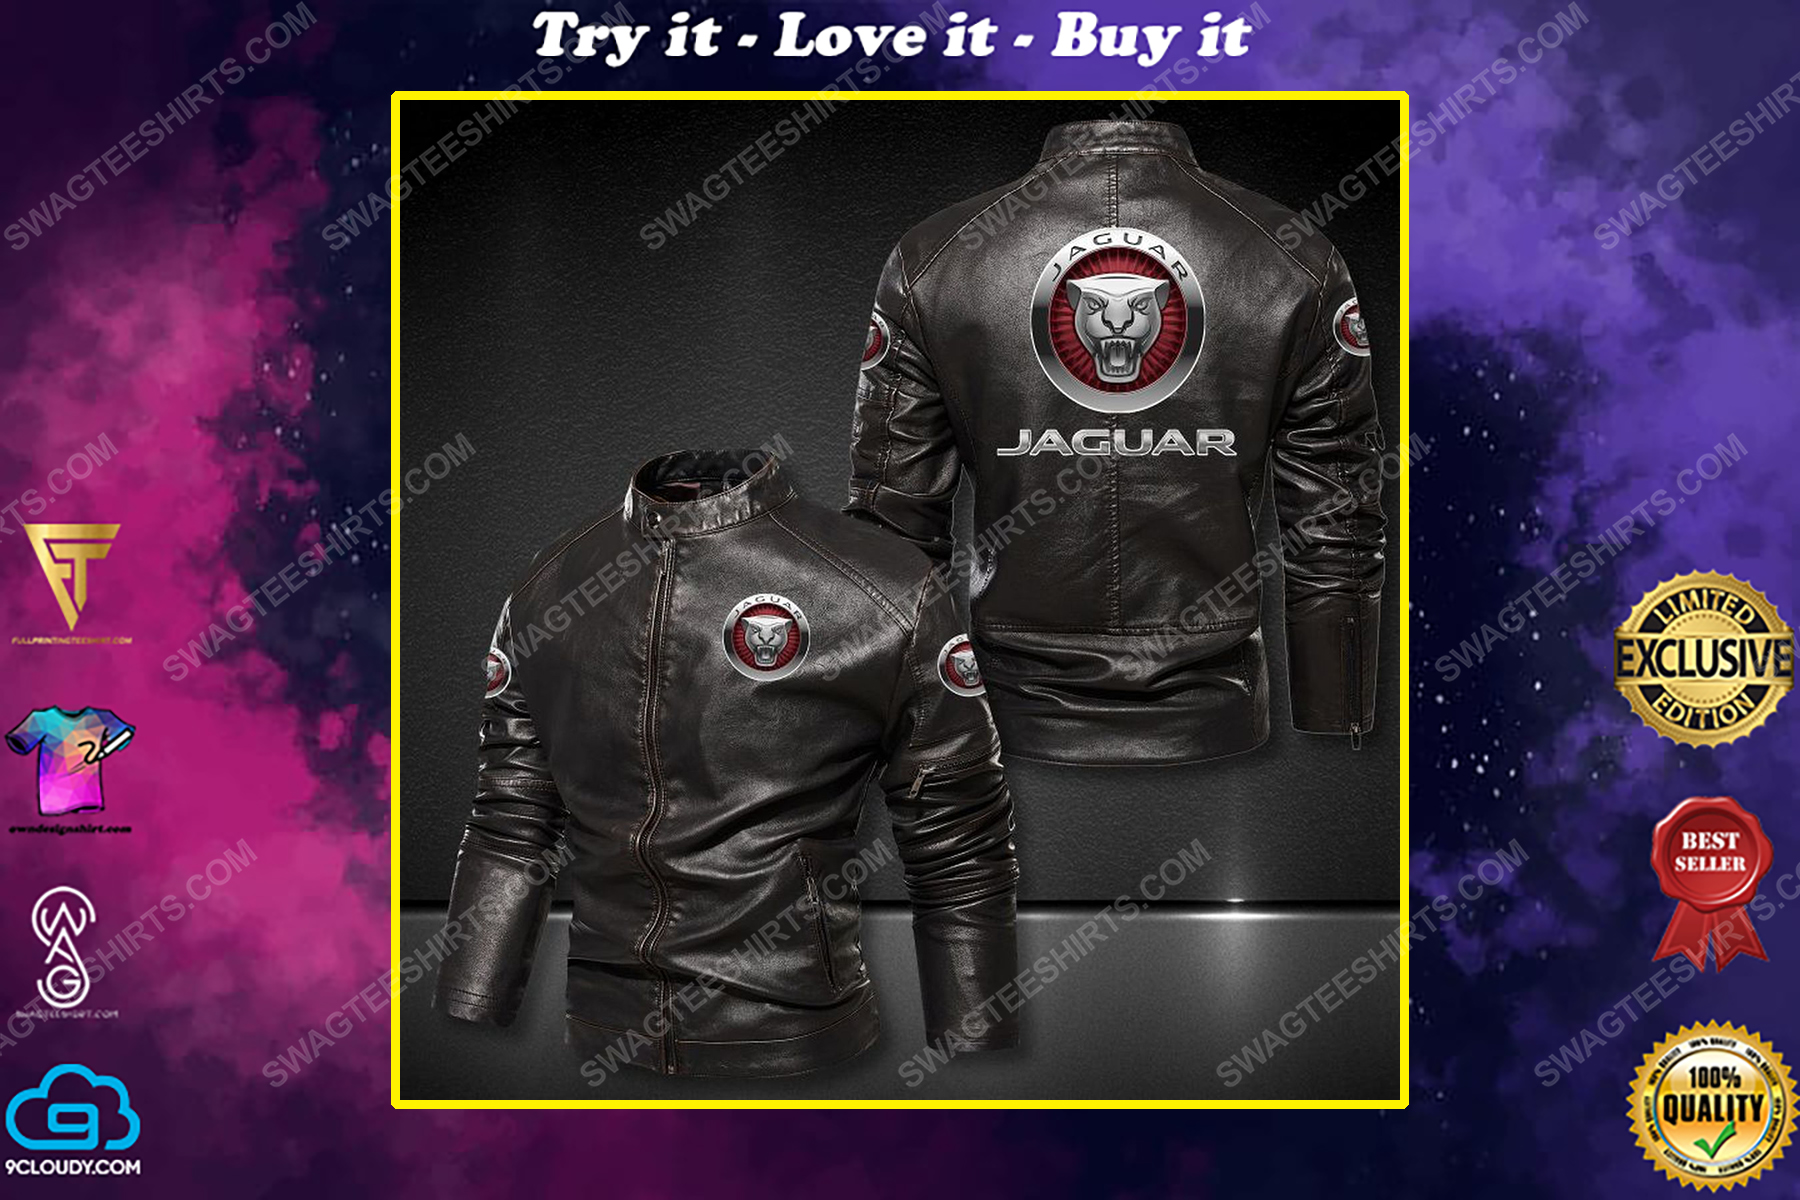 Jaguar sports cars racing leather jacket